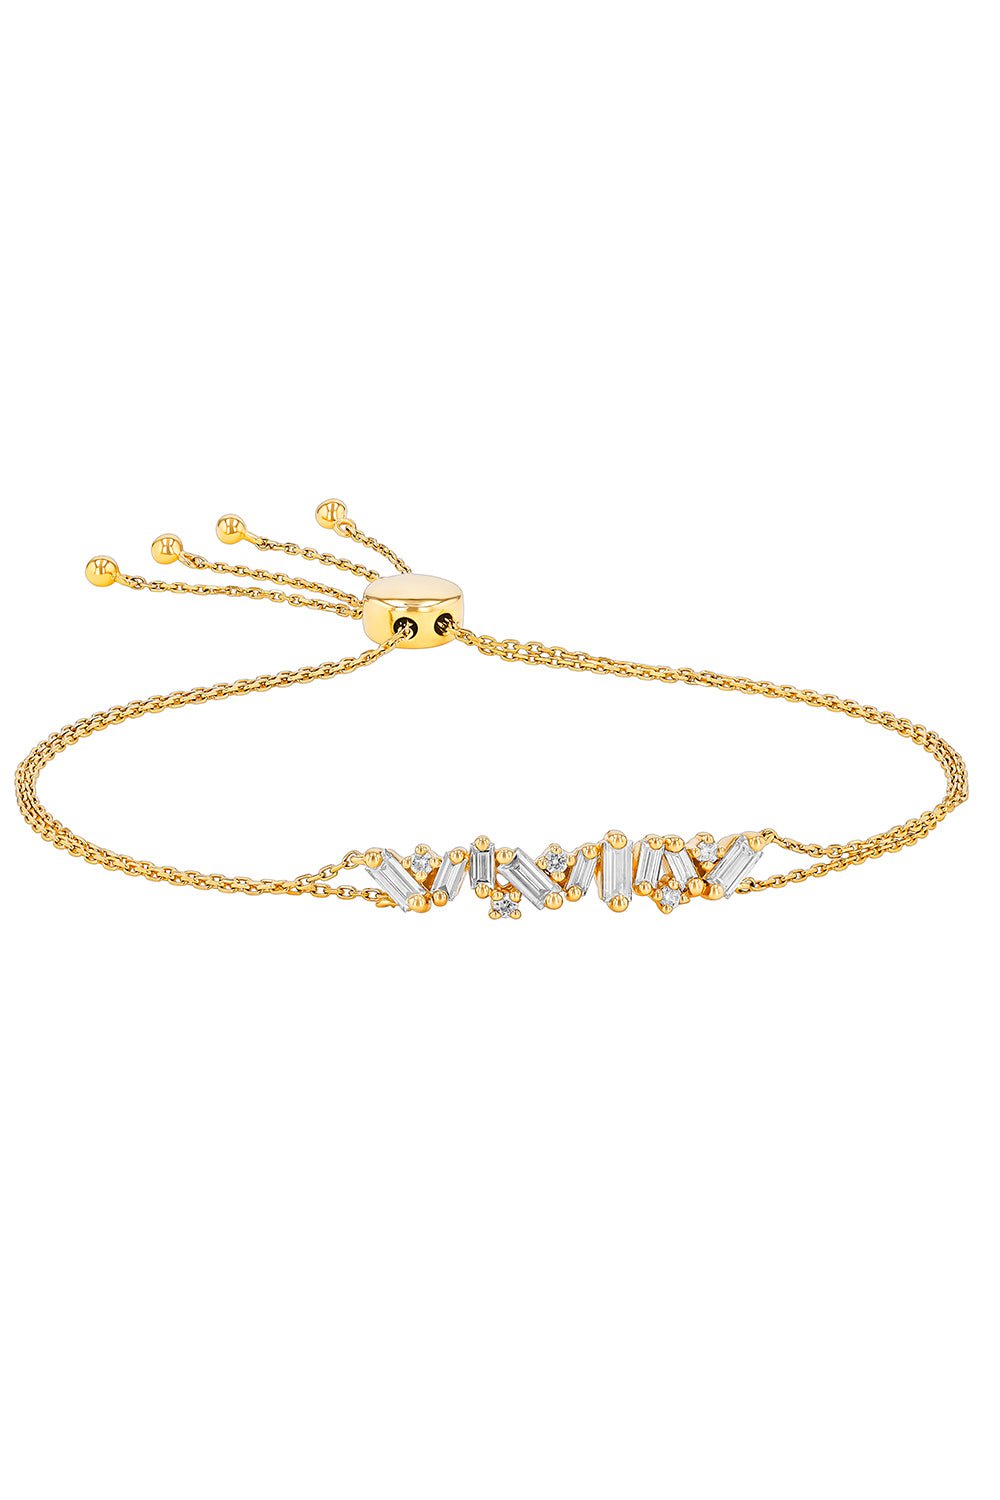 SUZANNE KALAN-Frenzy Diamond Bracelet-YELLOW GOLD